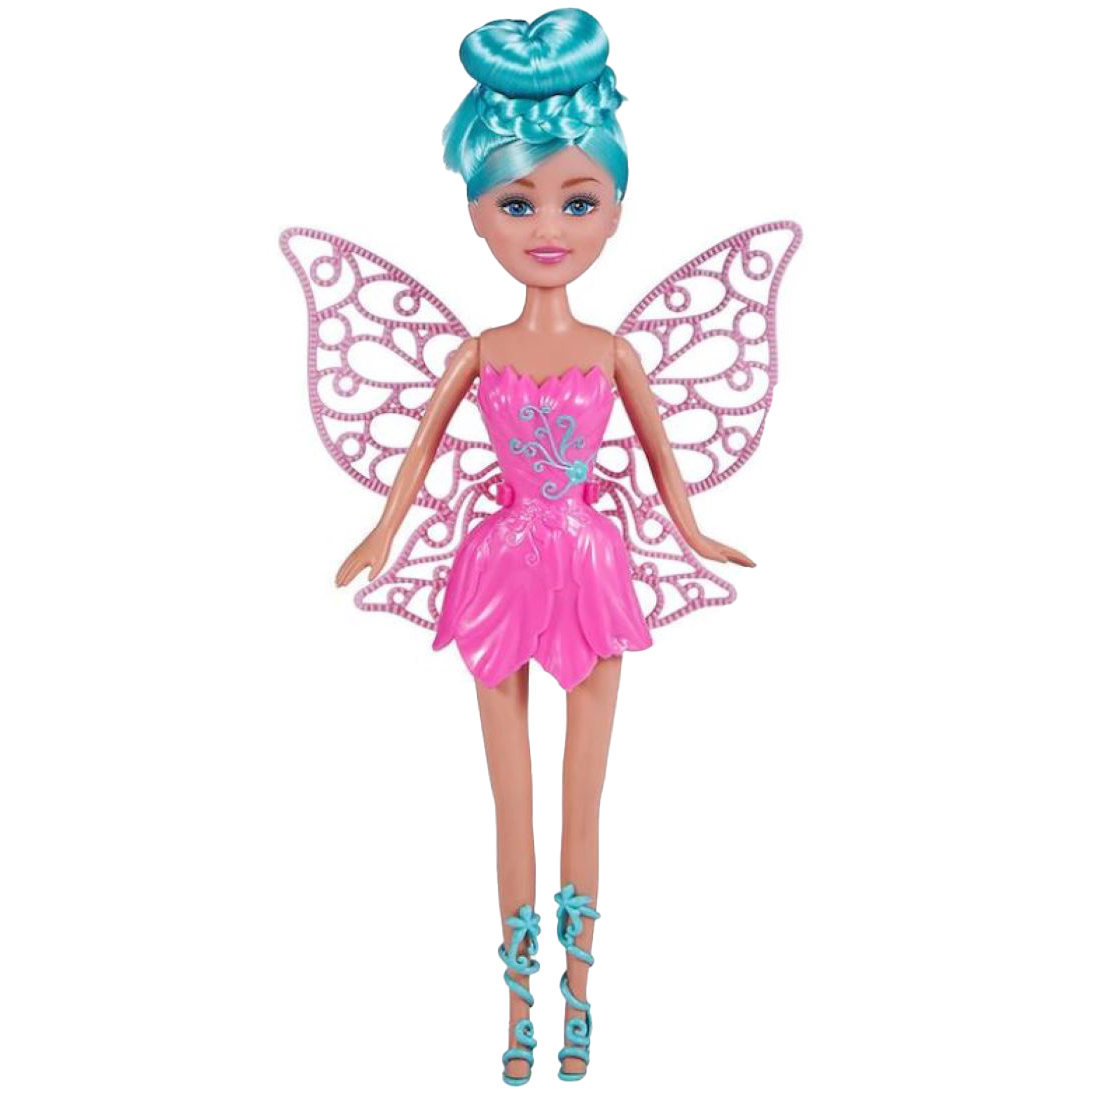 Sparkle Girlz - Fairy Bubbles Dreams Doll Playset